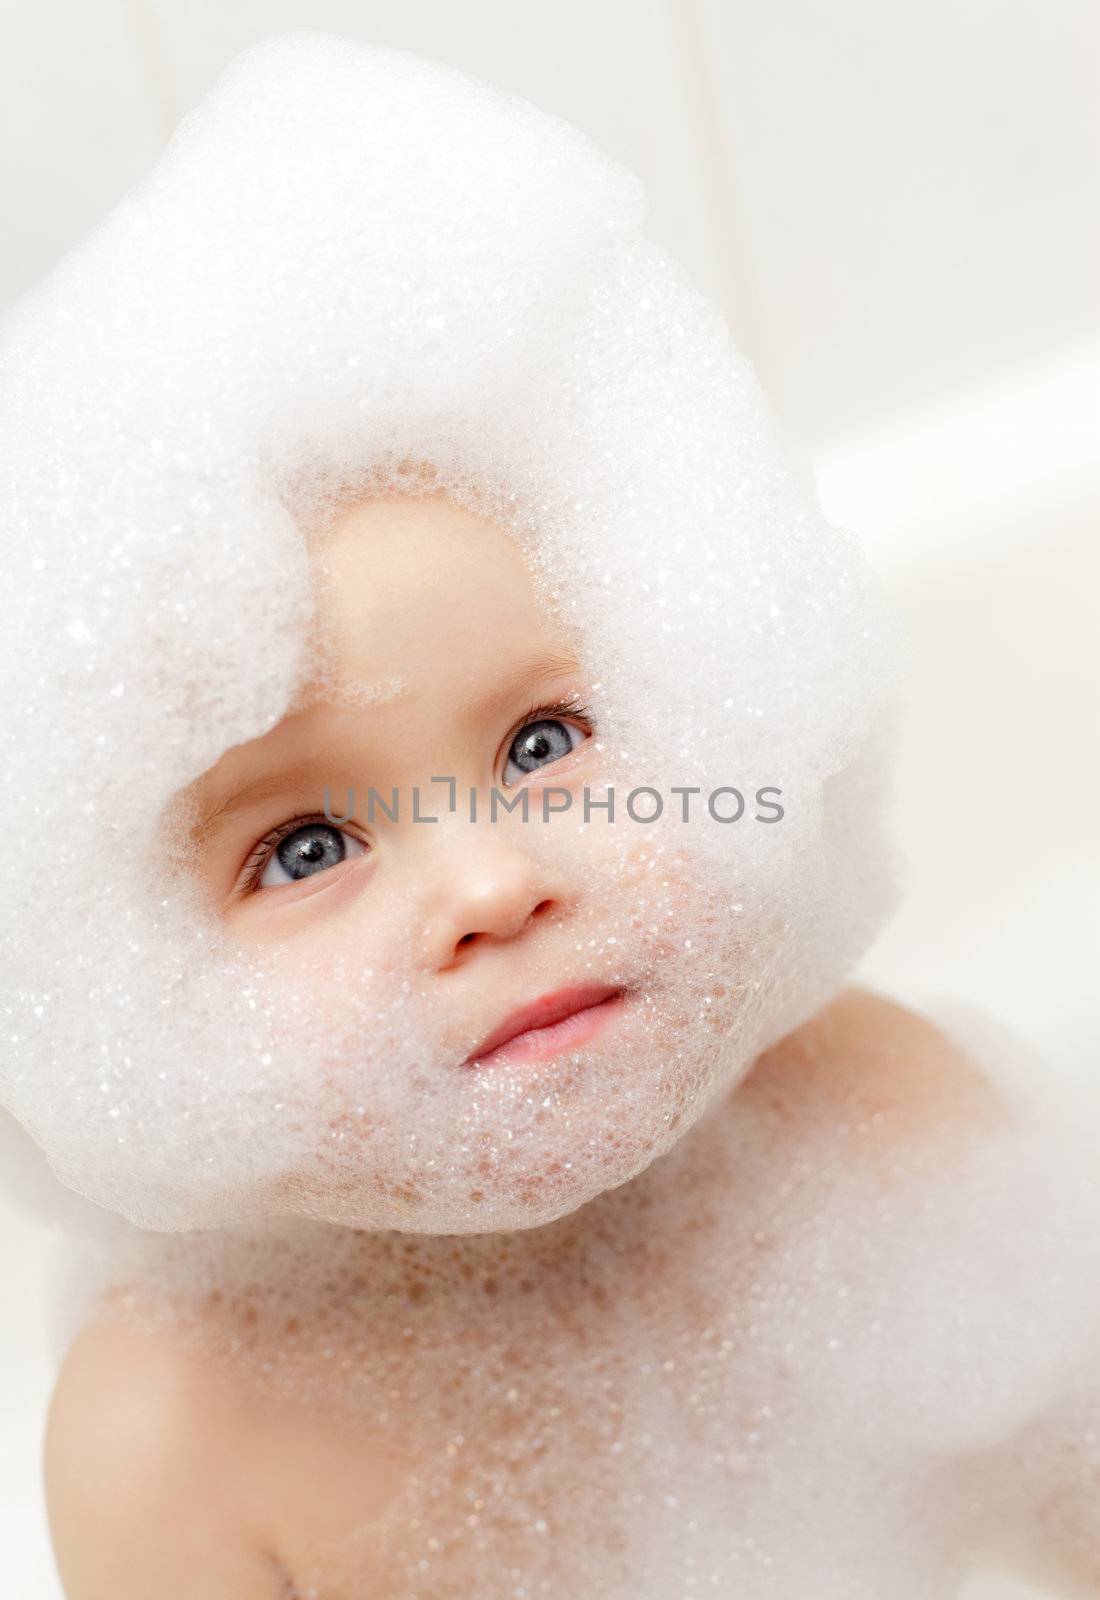 Cute little baby girl bathing in soapsuds